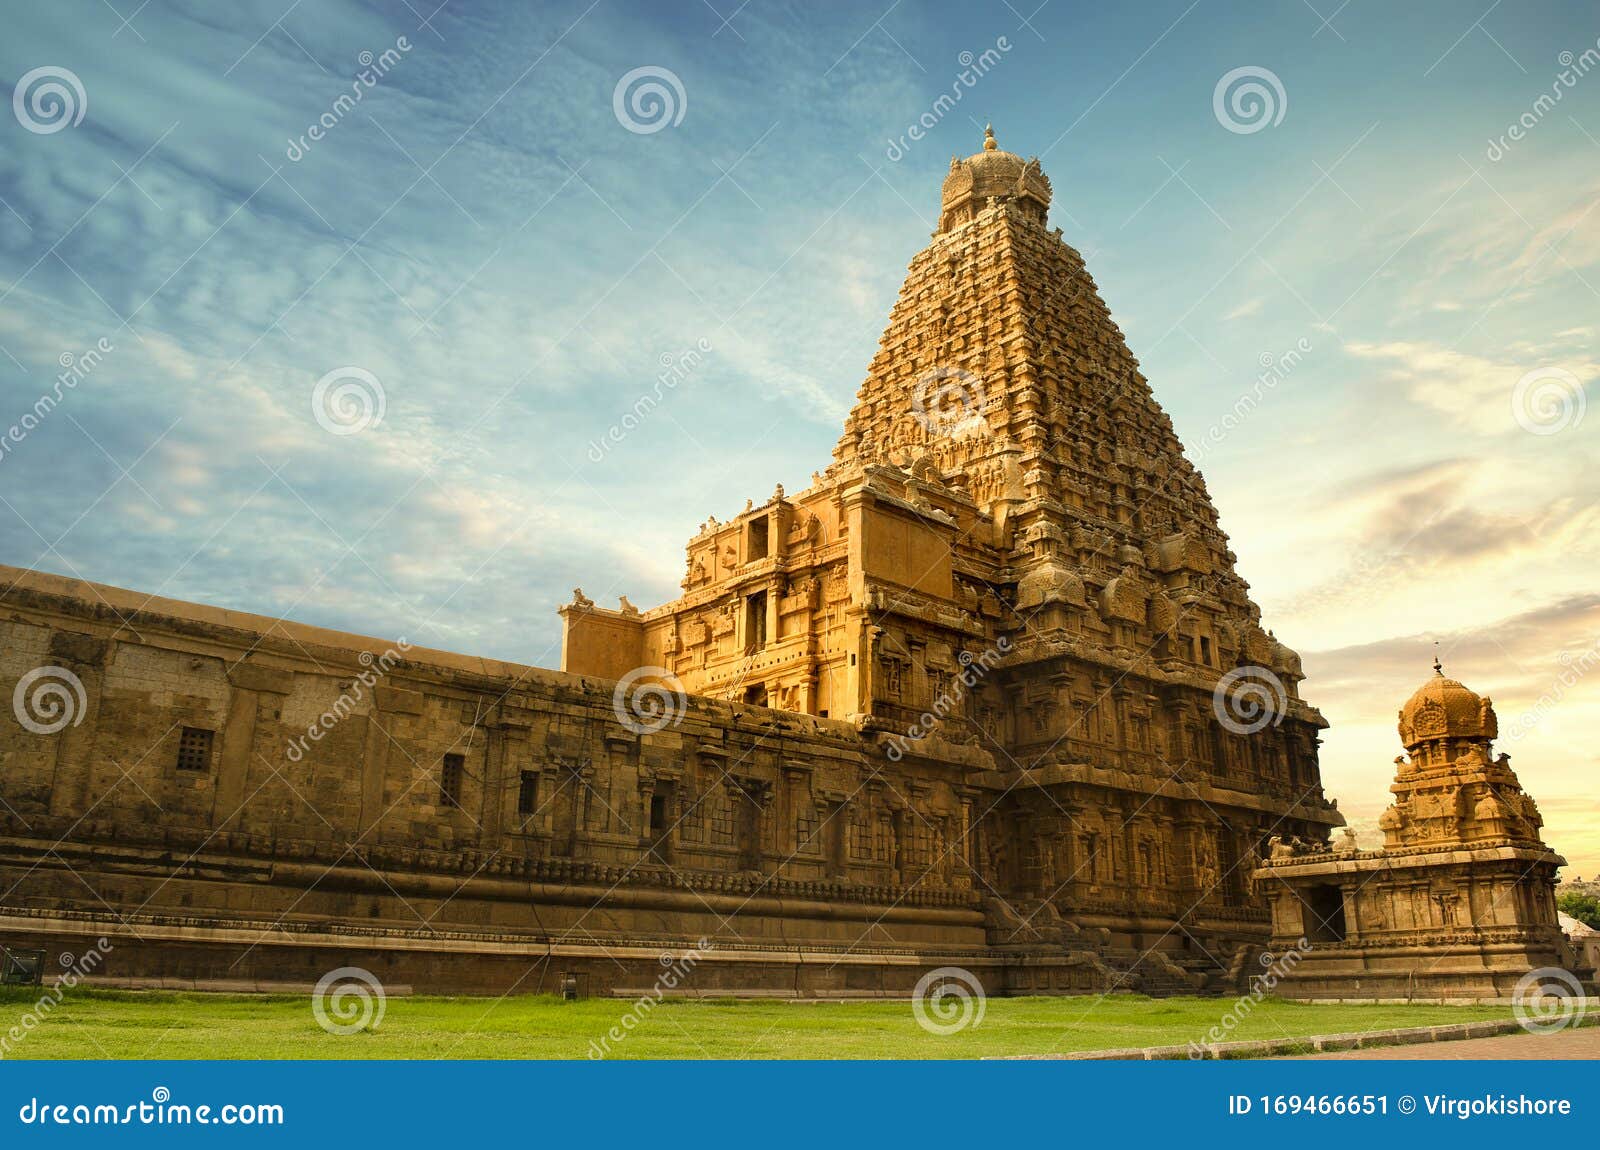 tanjore big temple brihadeshwara temple in tamil nadu, oldest and tallest temple in india